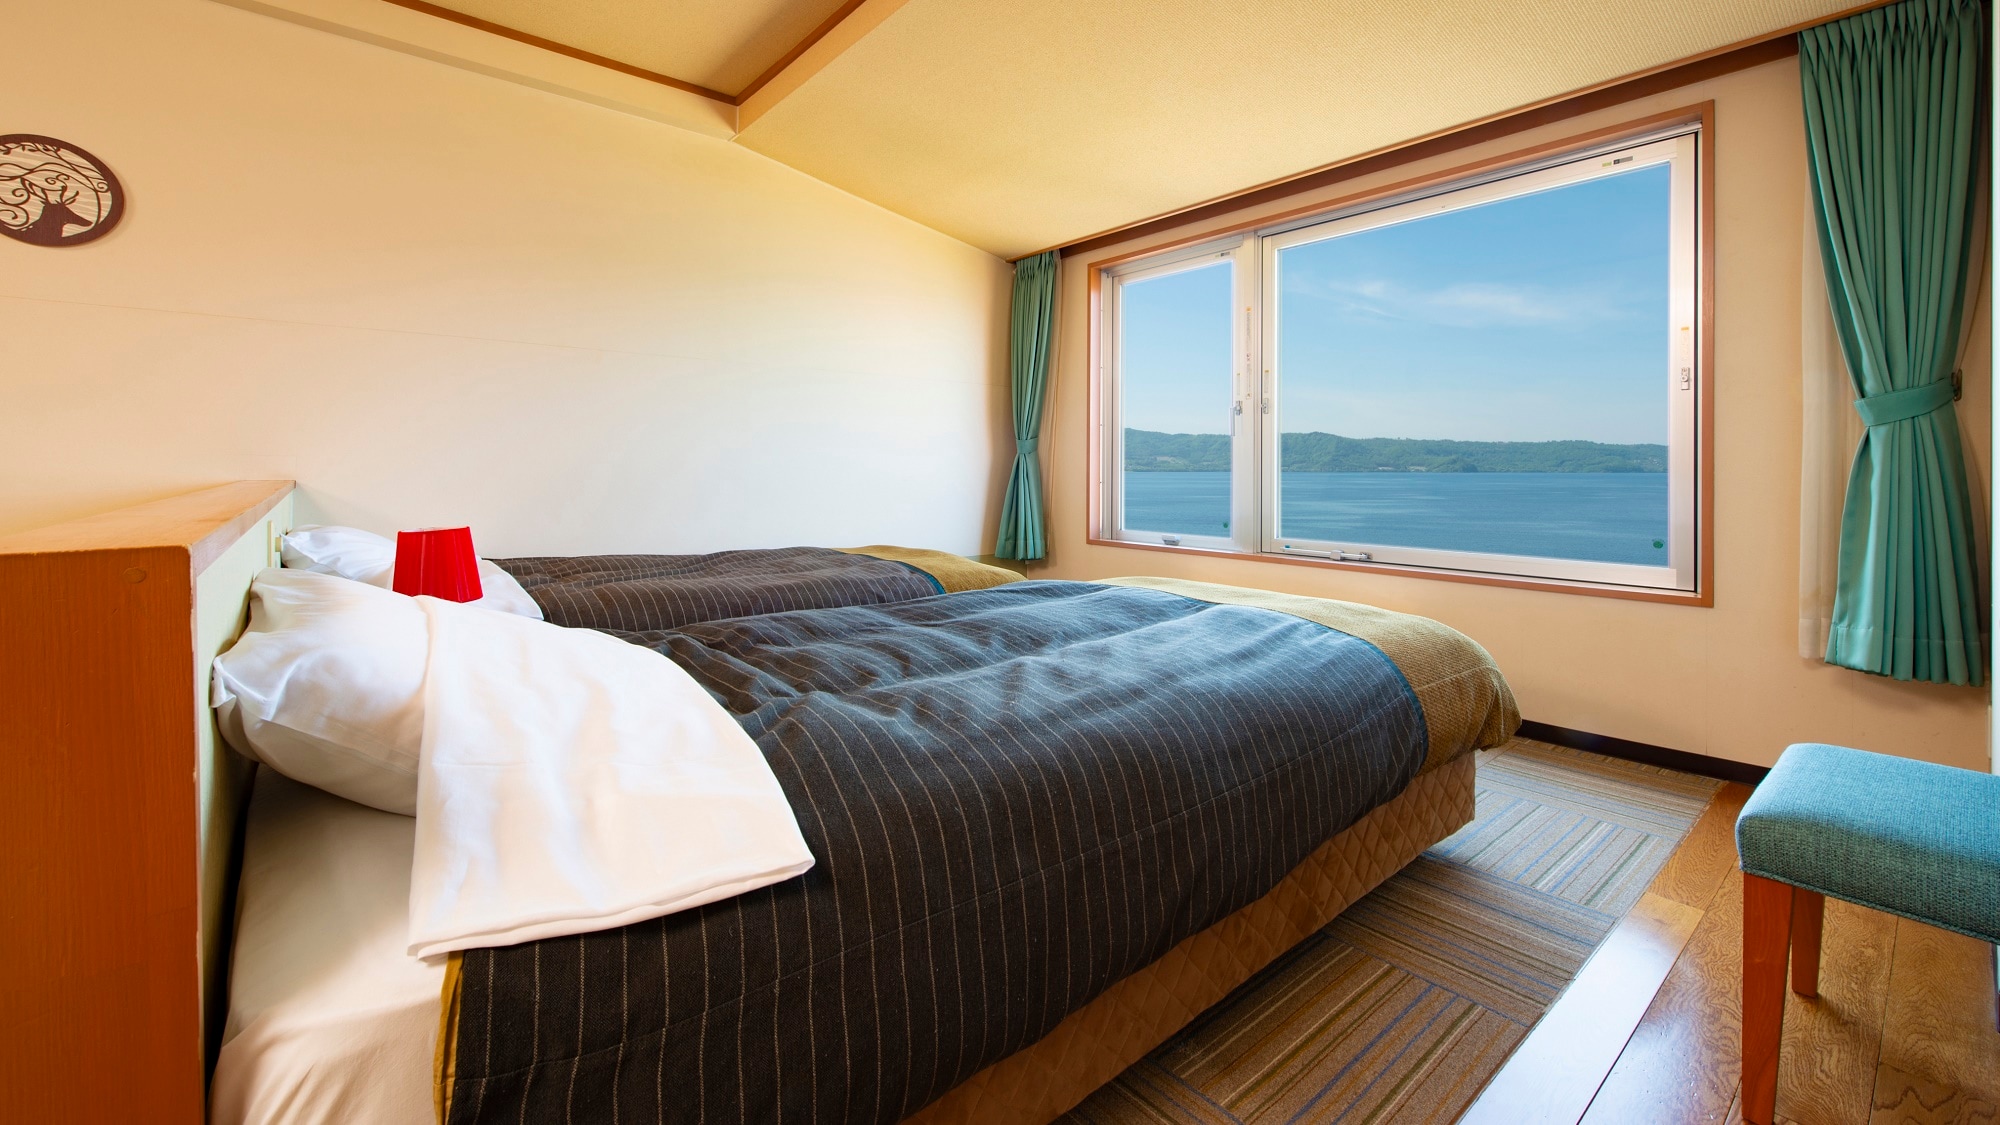 [Gedung Barat / Kamar Jepang / Barat] Tersedia dua jenis kamar: kamar dengan tempat tidur di ambang jendela yang menghadap ke Danau Toya dan kamar dengan ruang tikar tatami.